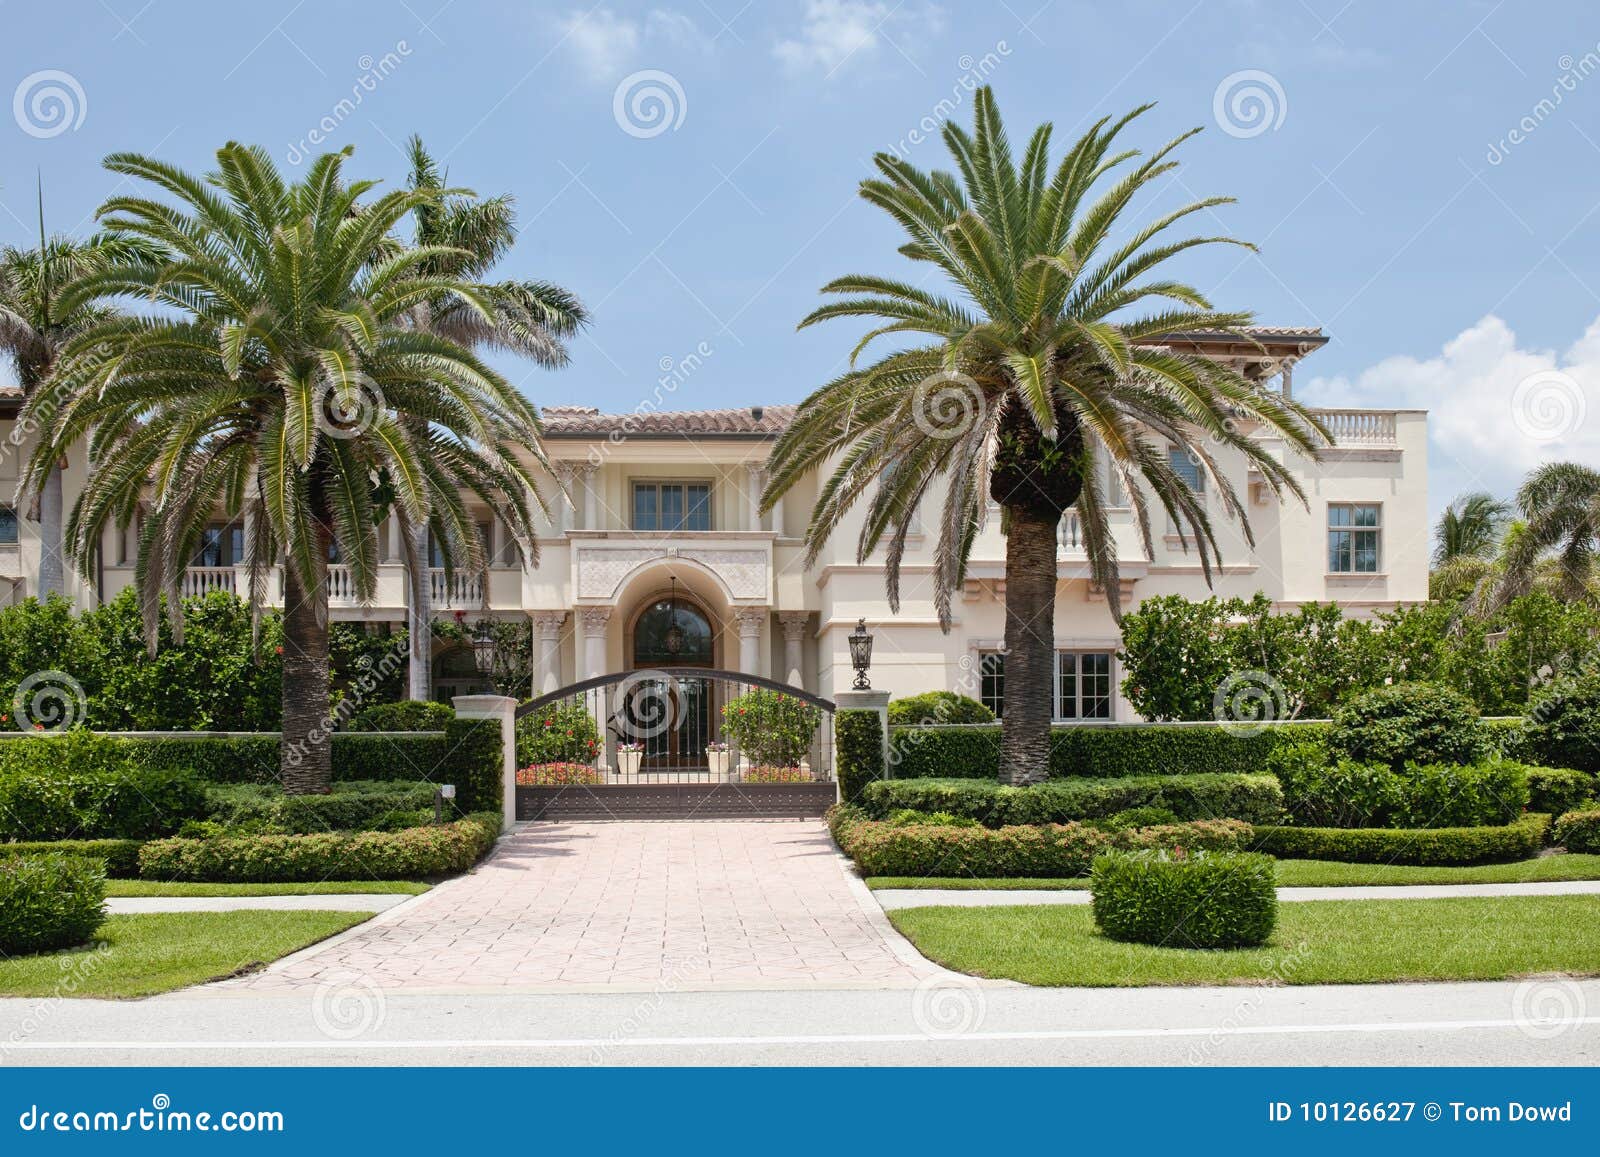 luxurious florida mansion